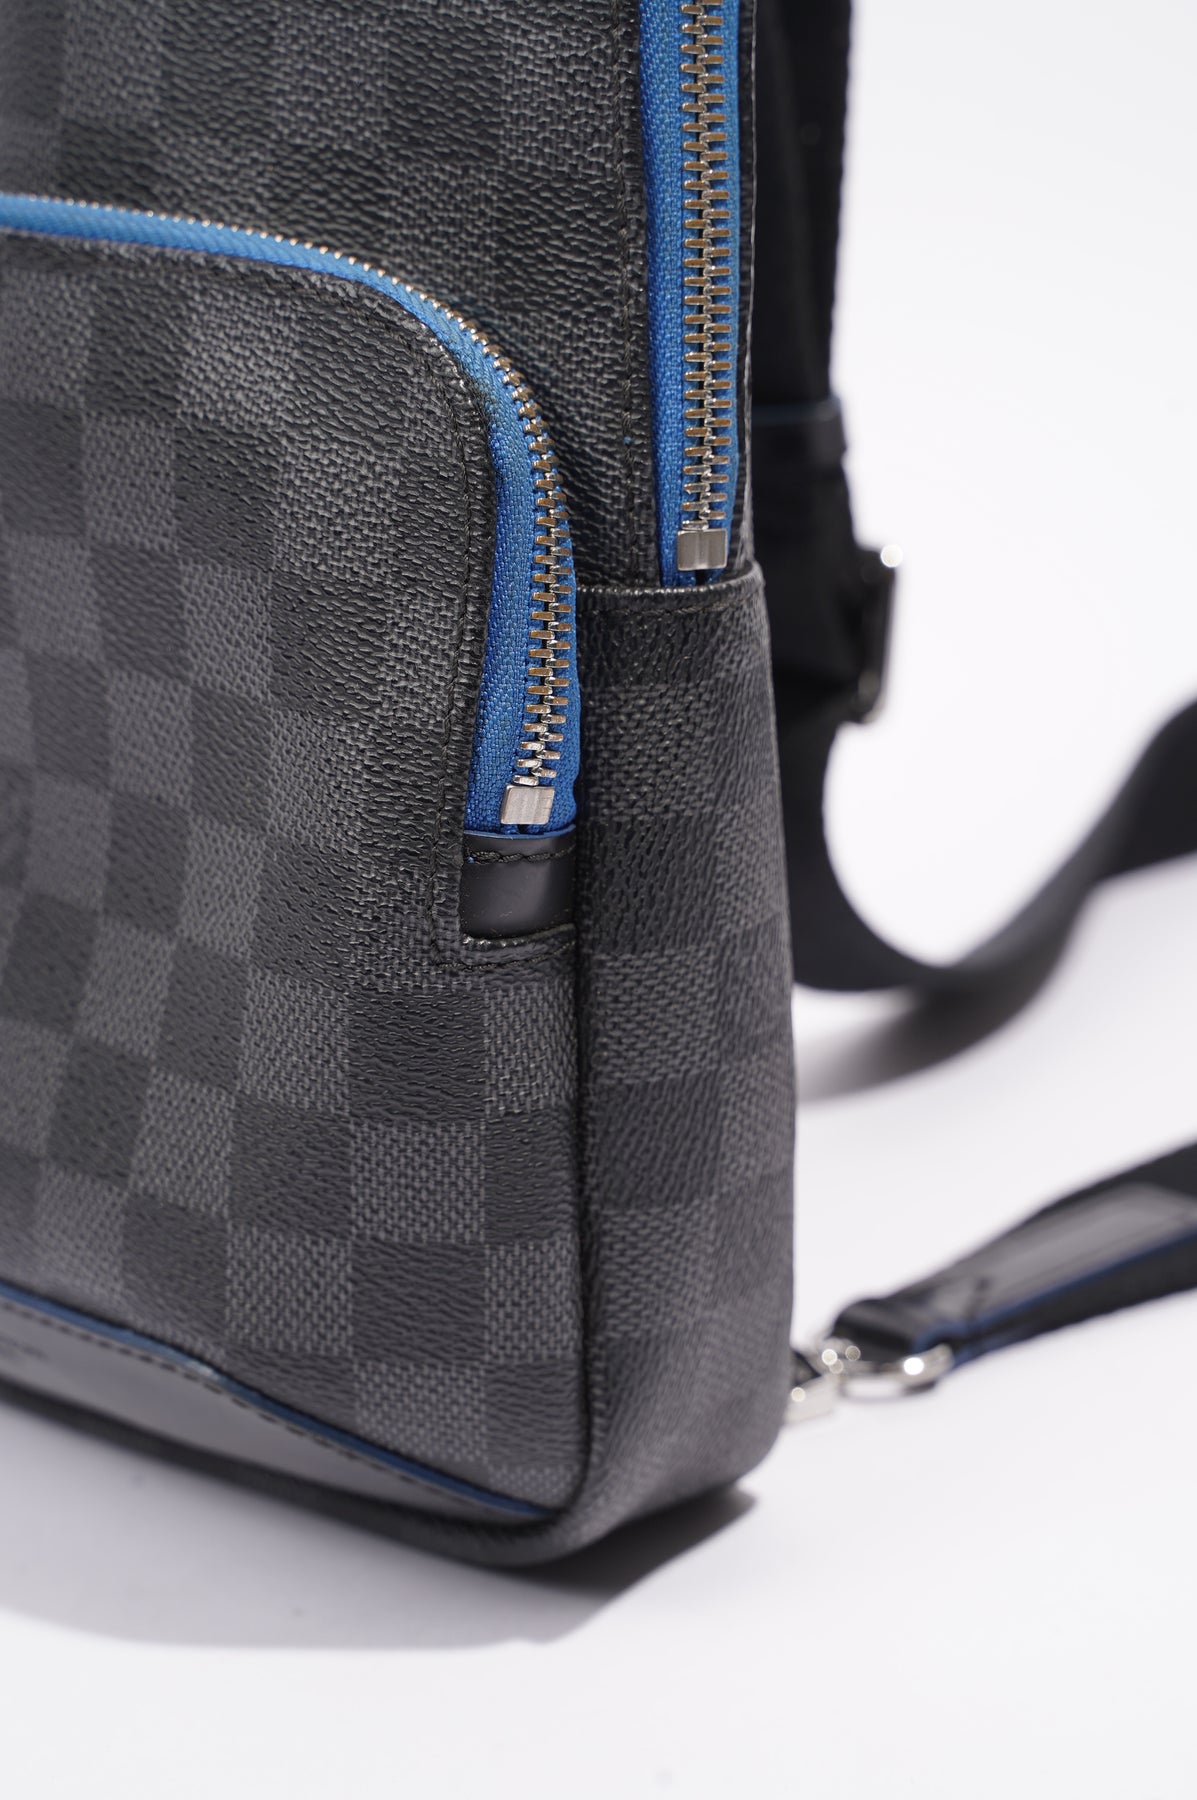 Shop Louis Vuitton DAMIER Avenue sling bag (N40097) by inthewall